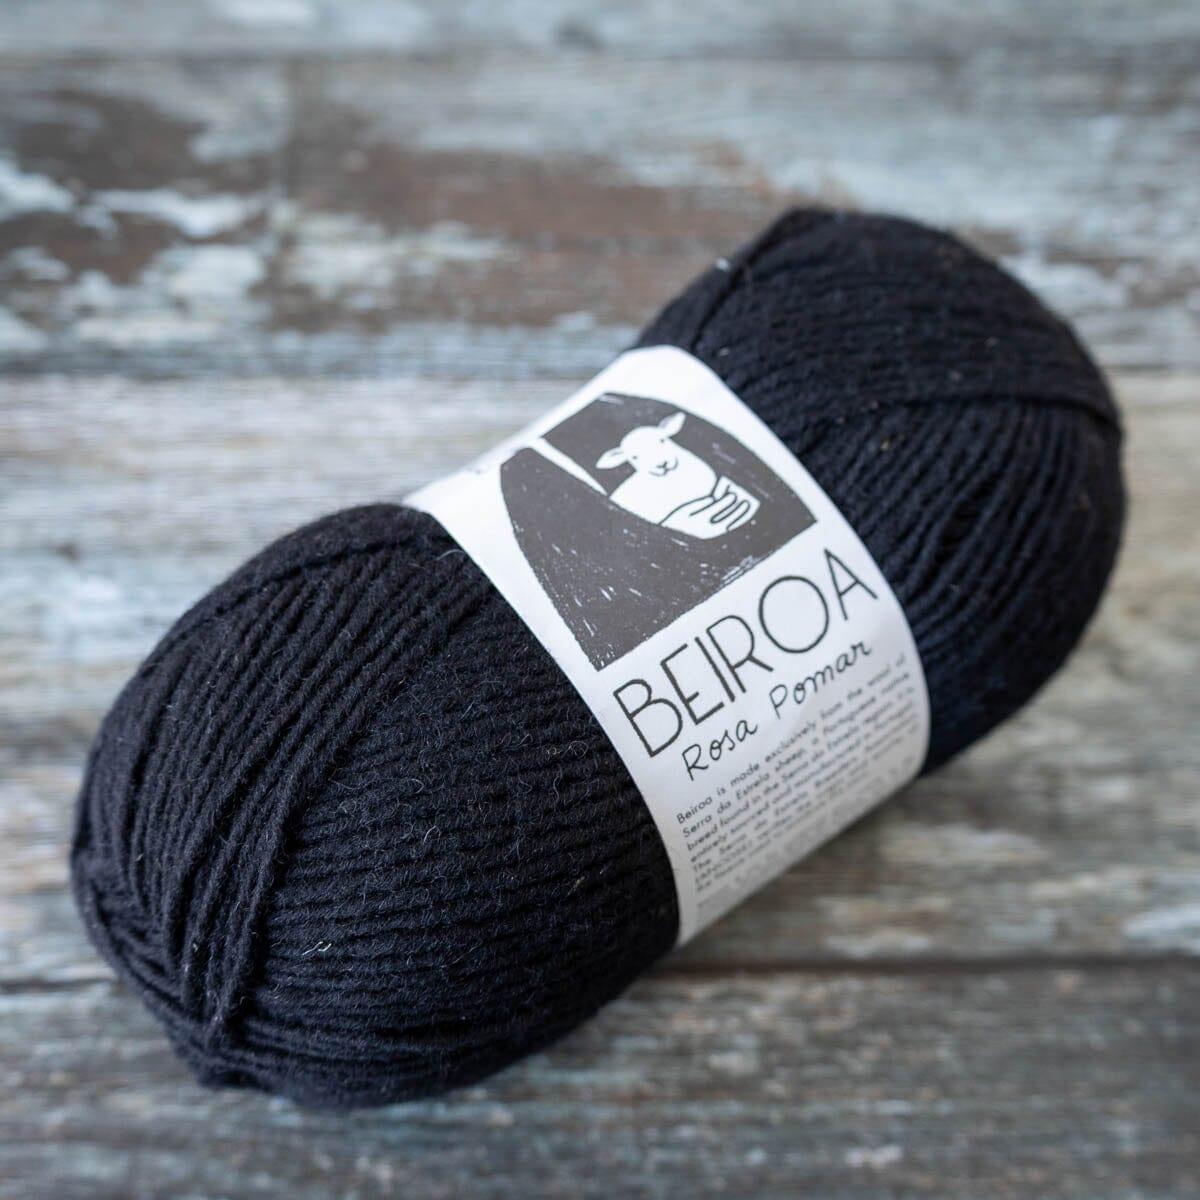 Retrosaria Retrosaria Beiroa - 673 - Worsted Knitting Yarn